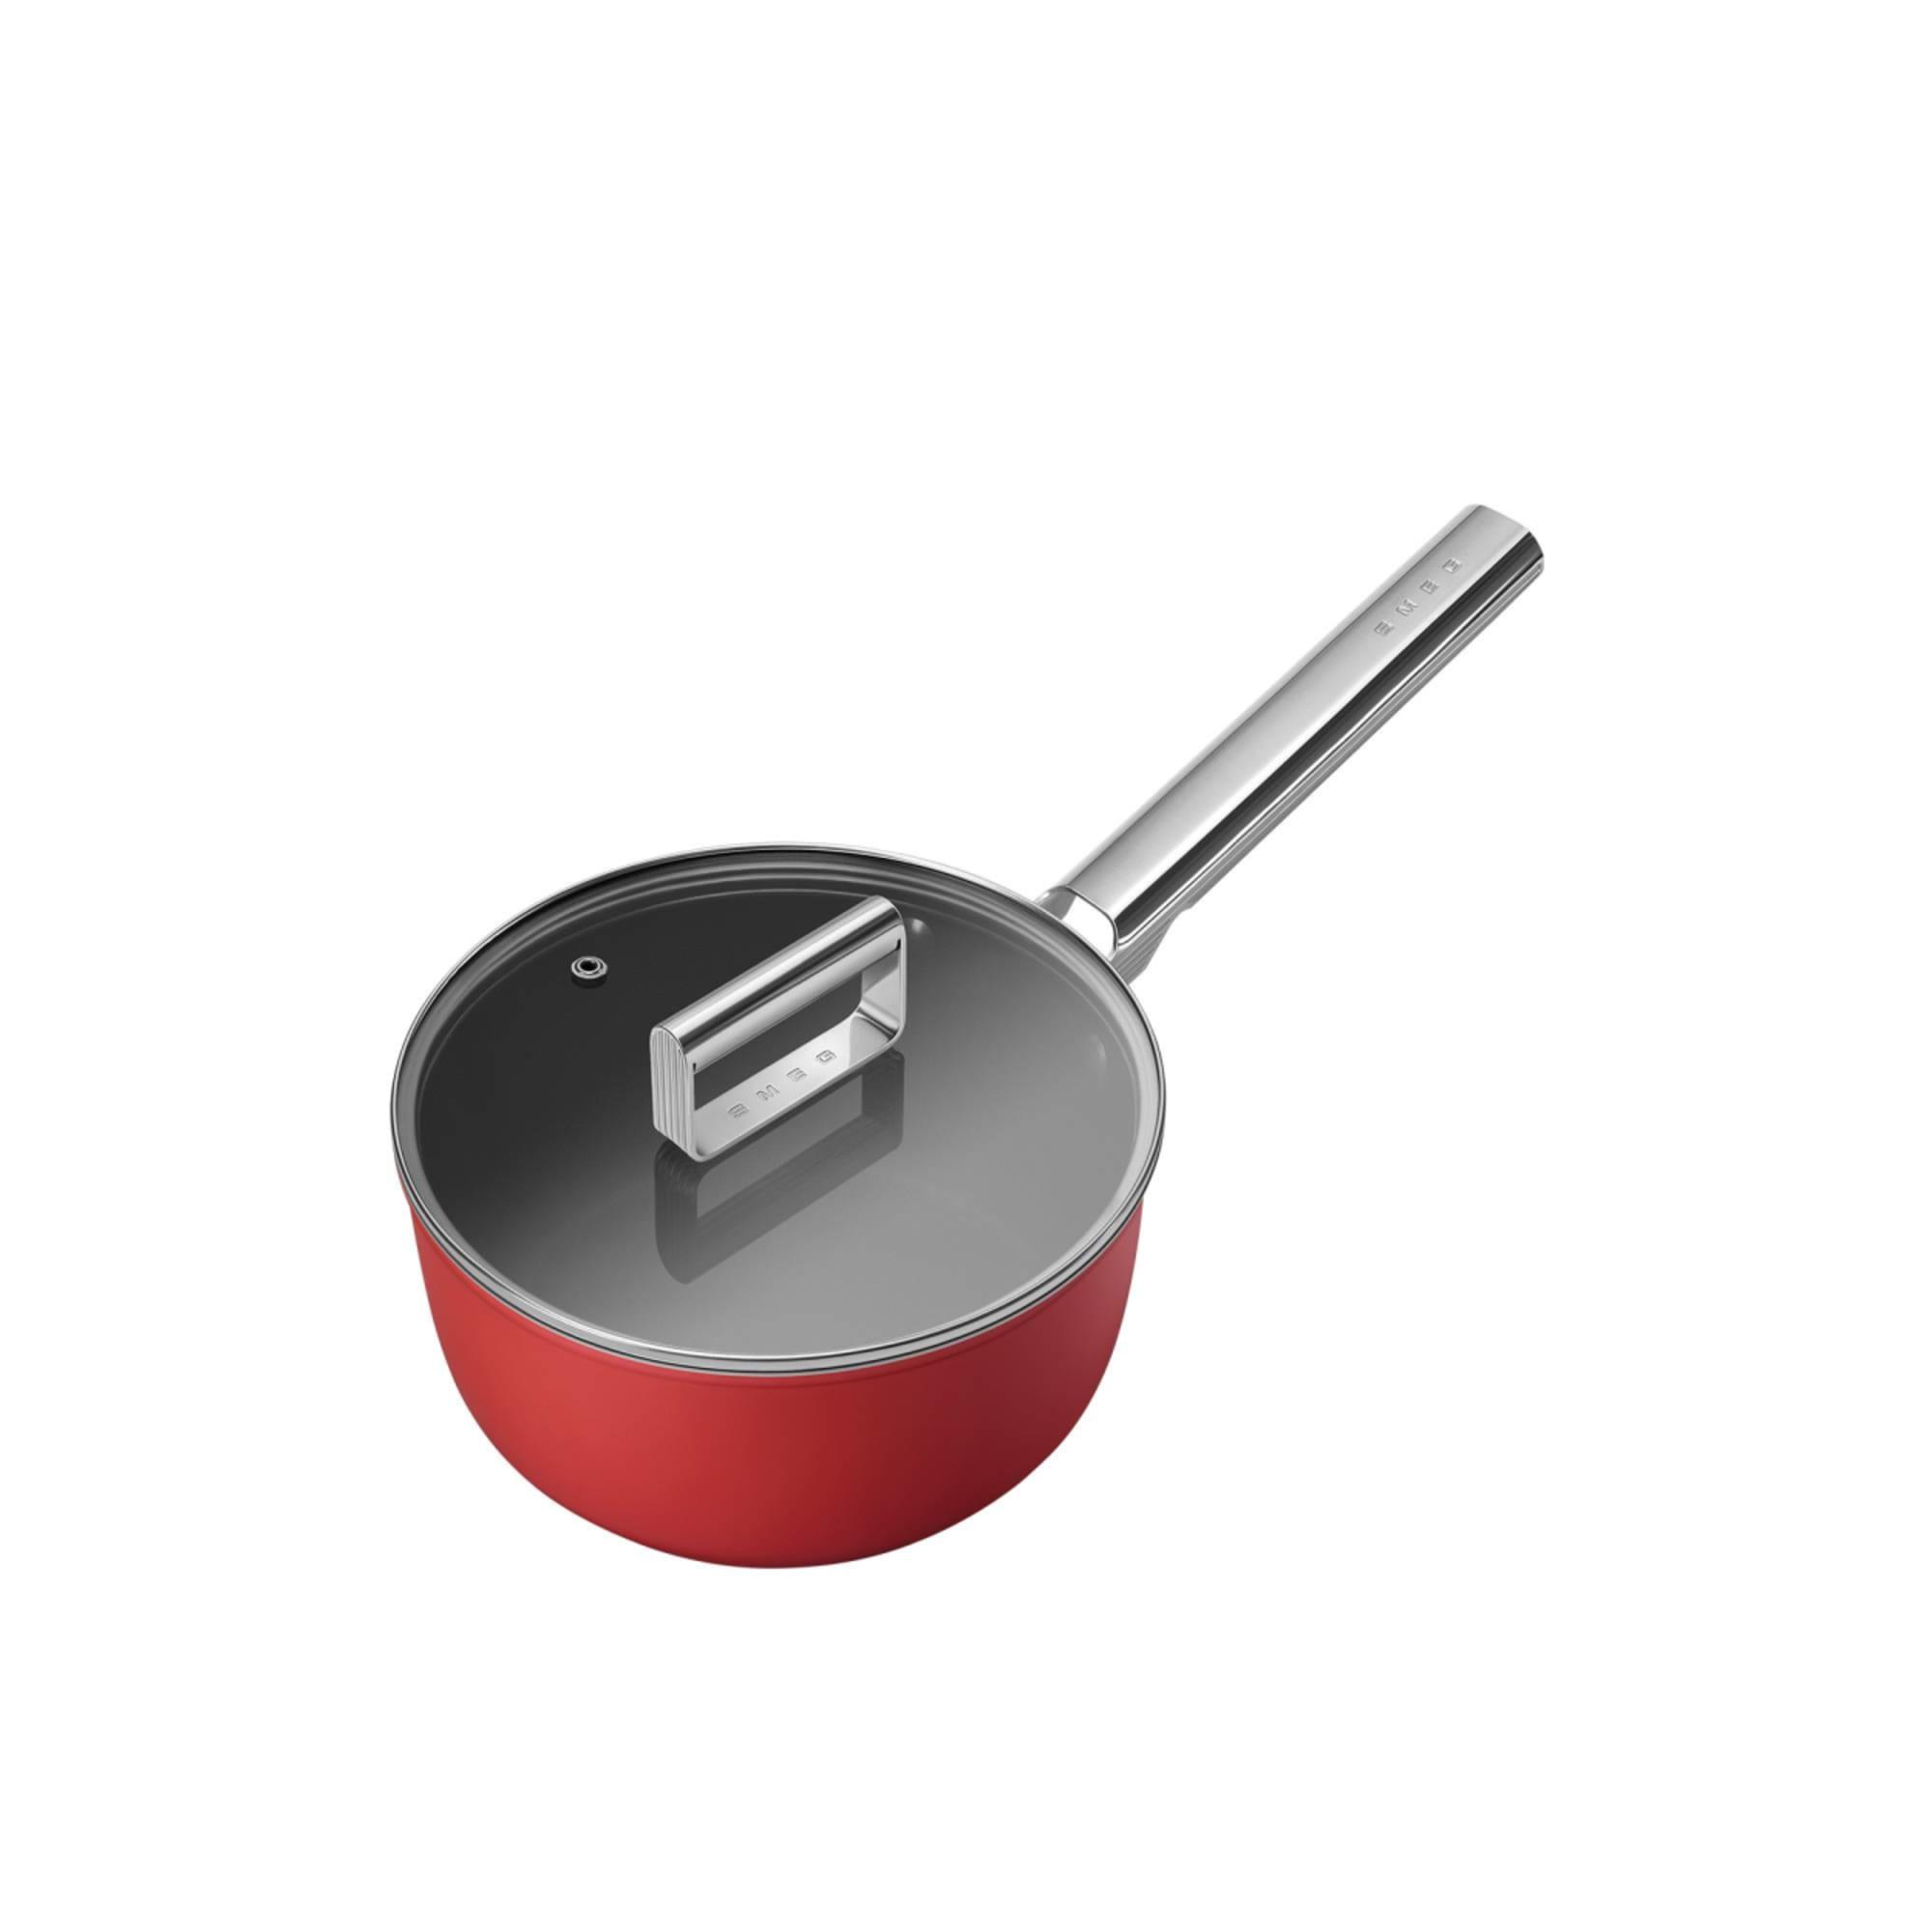 Smeg Non Stick Saucepan with Lid 20cm - 2.7L Red Image 6